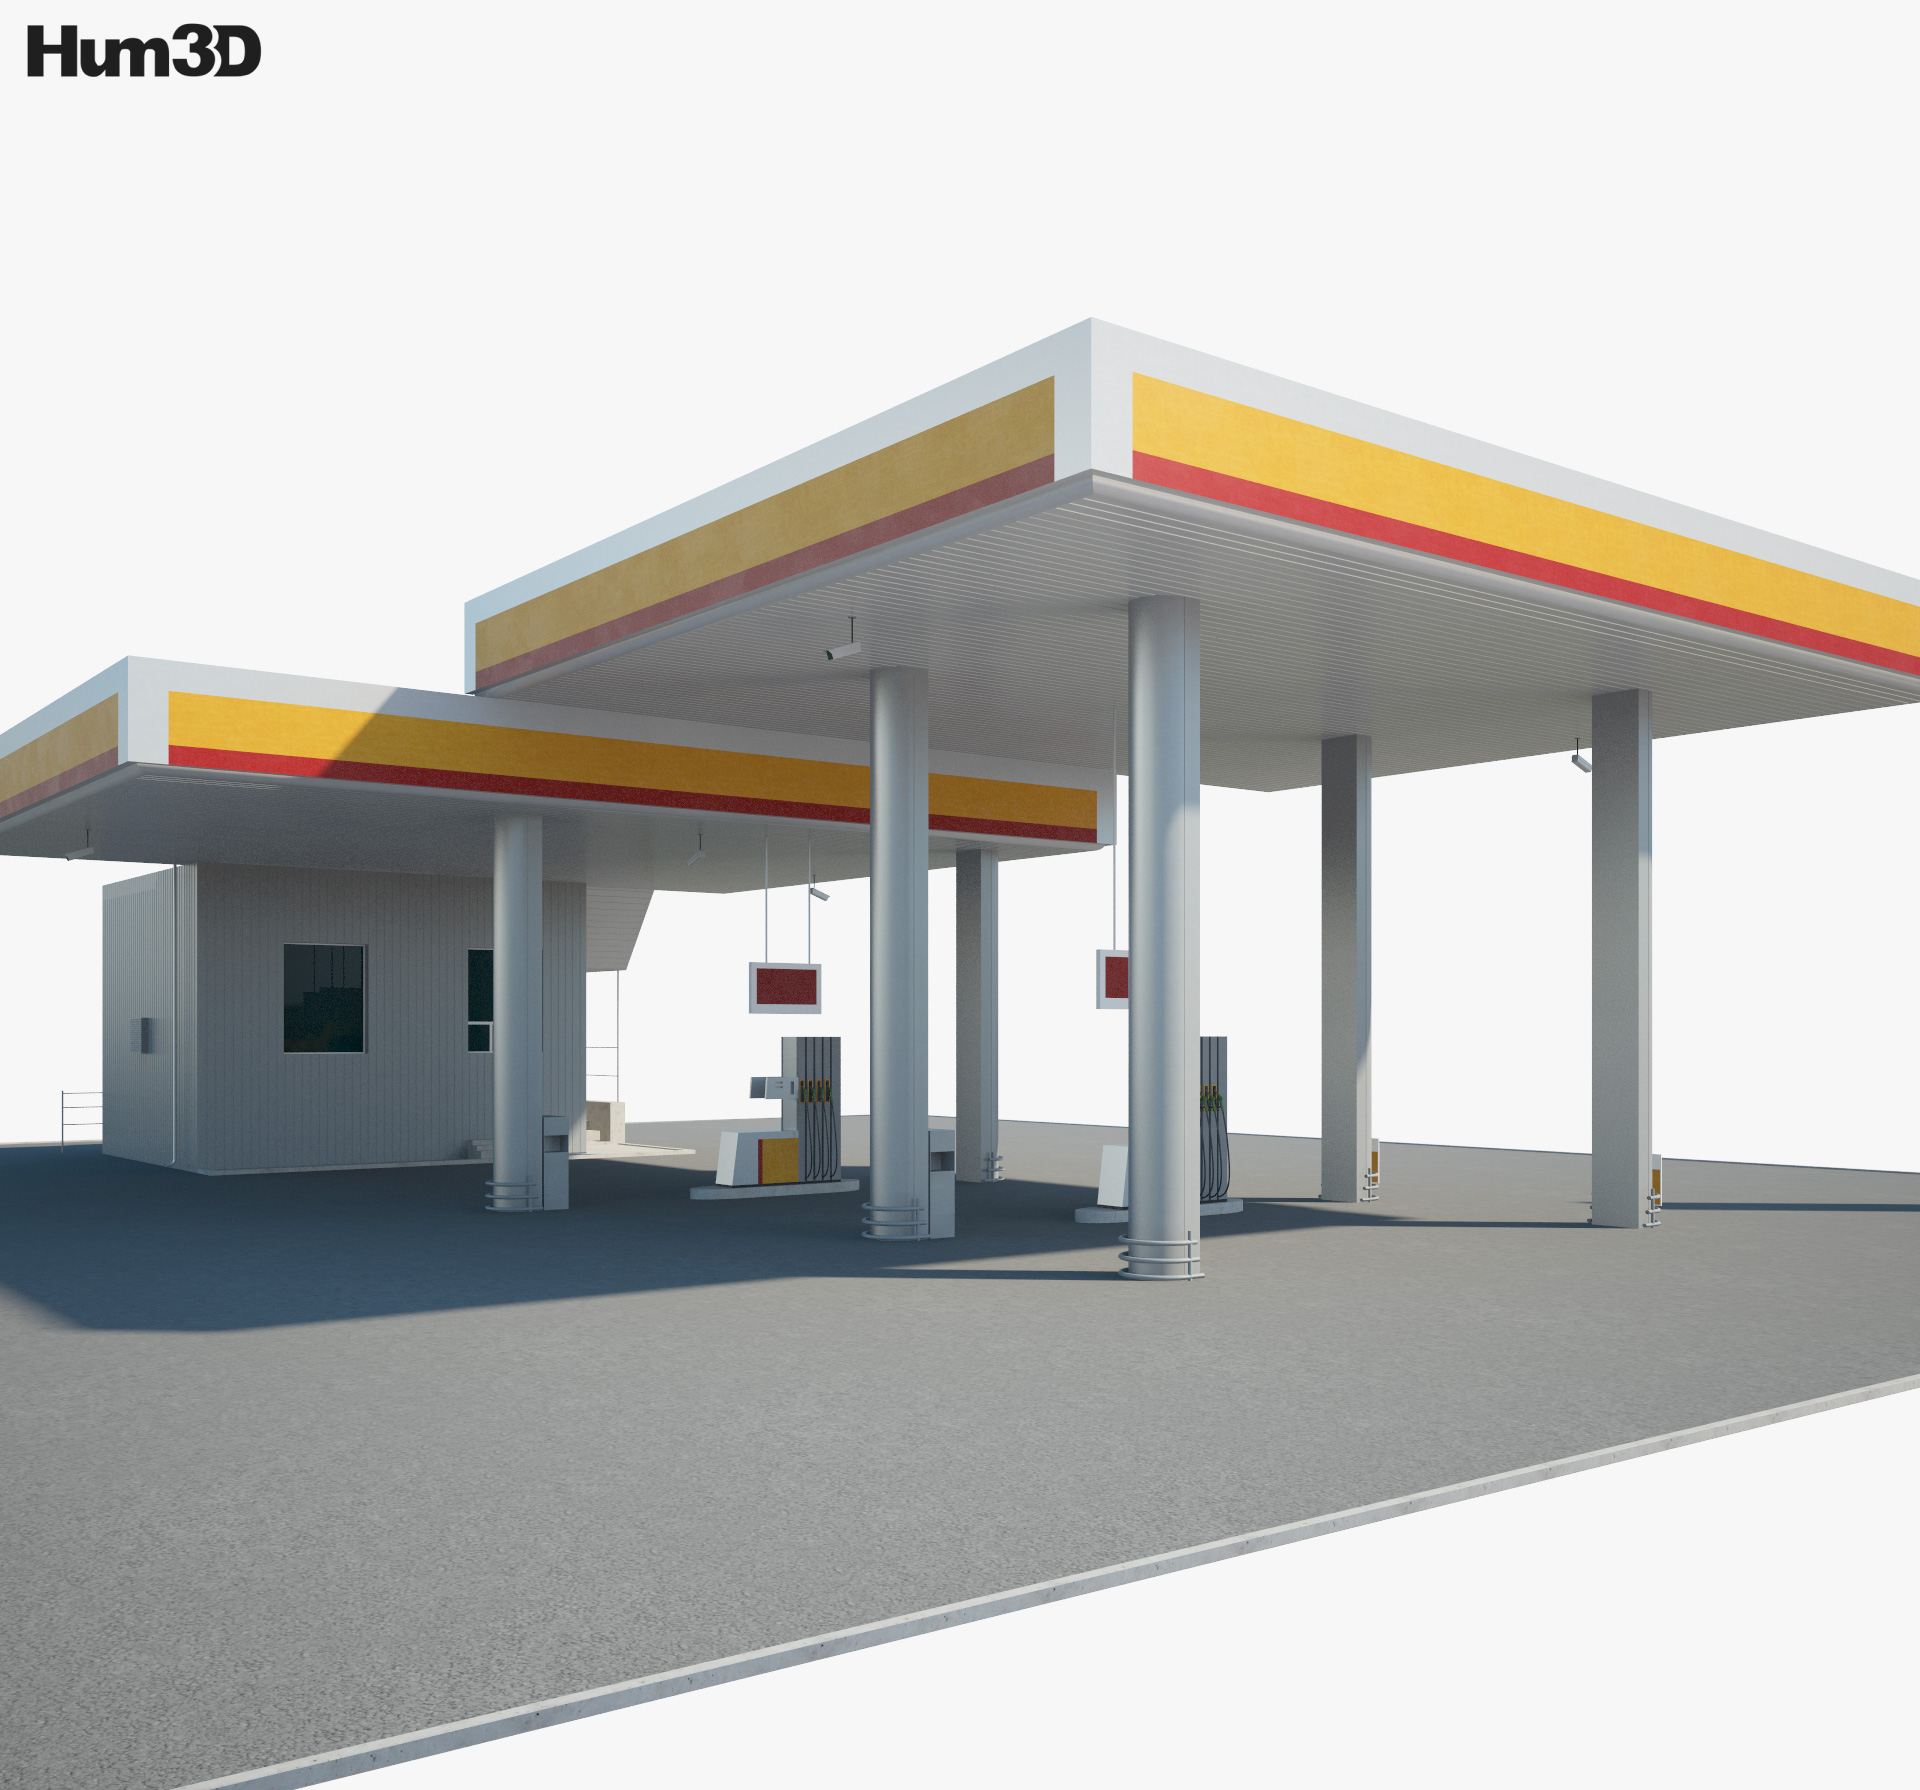 Shell Posto de gasolina 001 Modelo 3d